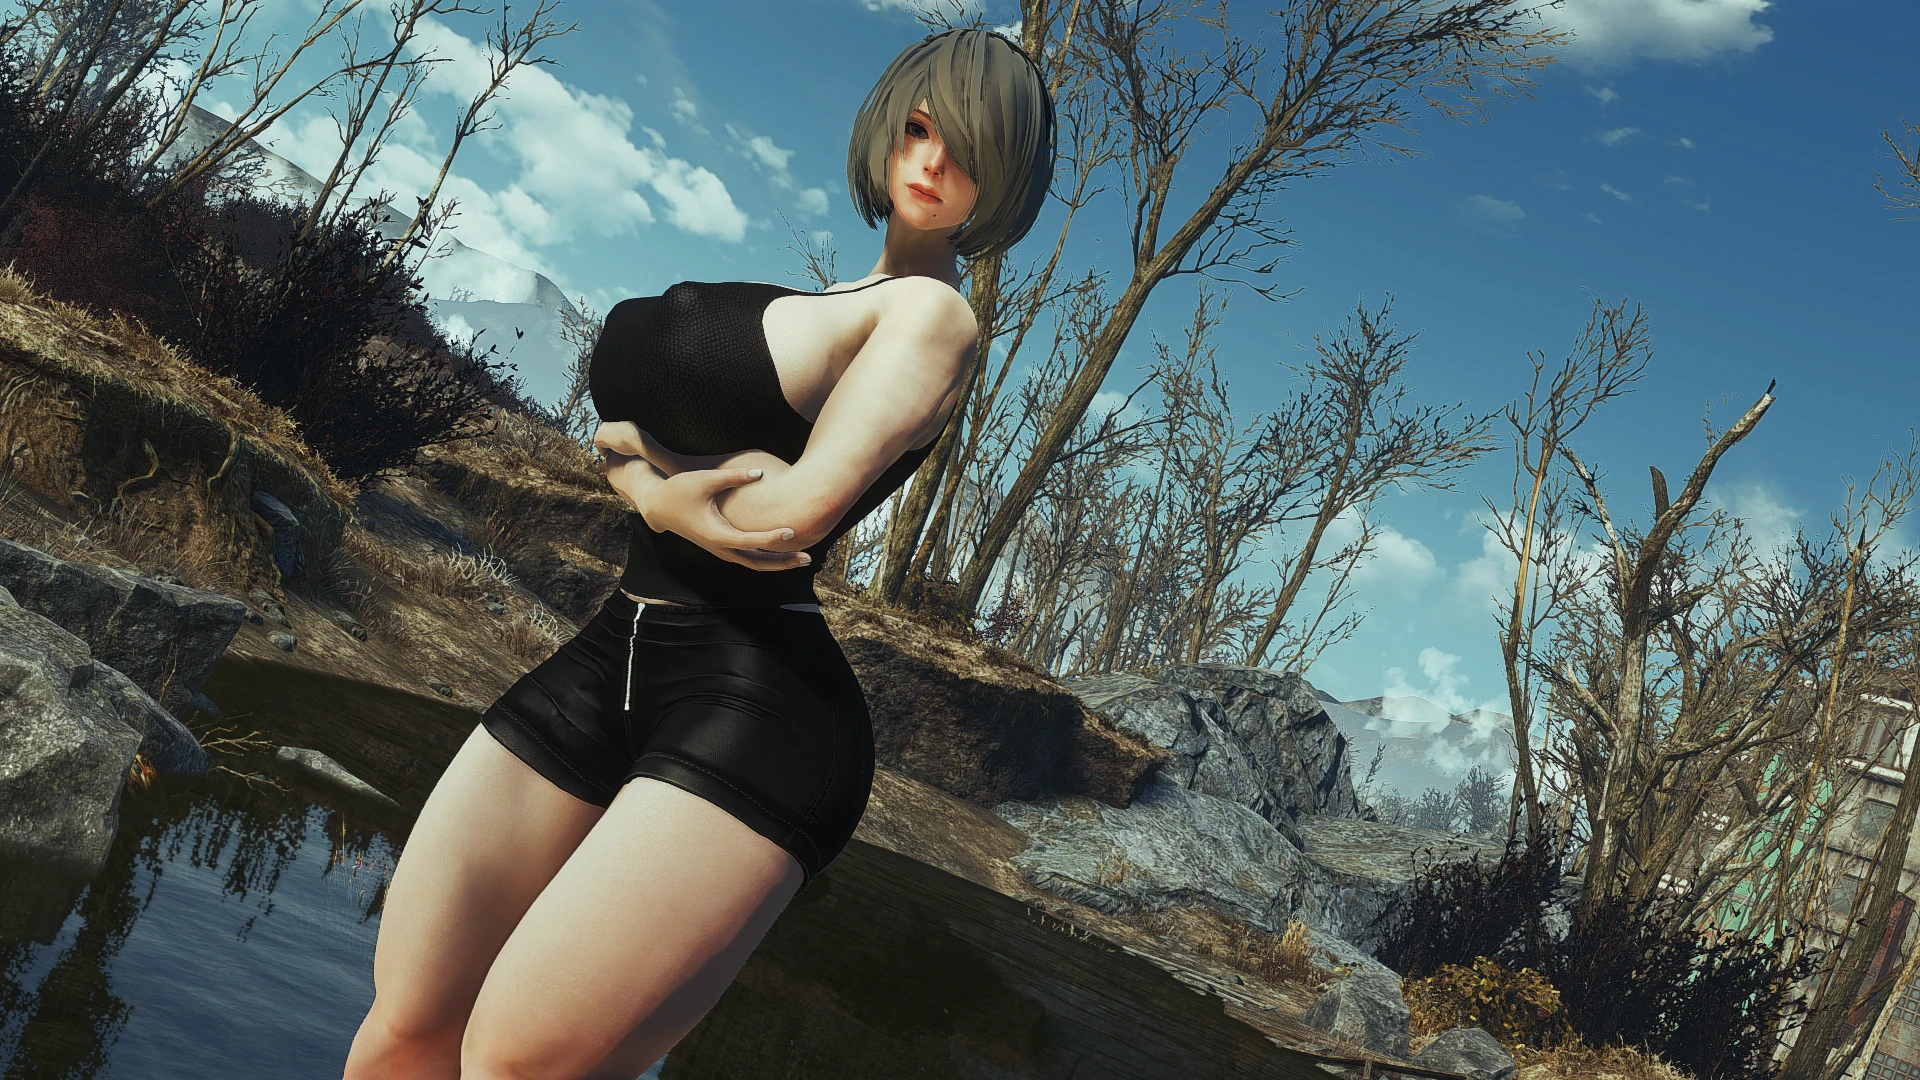 Vtaw Wardrobe 1 Atomic Beauty Cbp At Fallout 4 Nexus Mods And Community